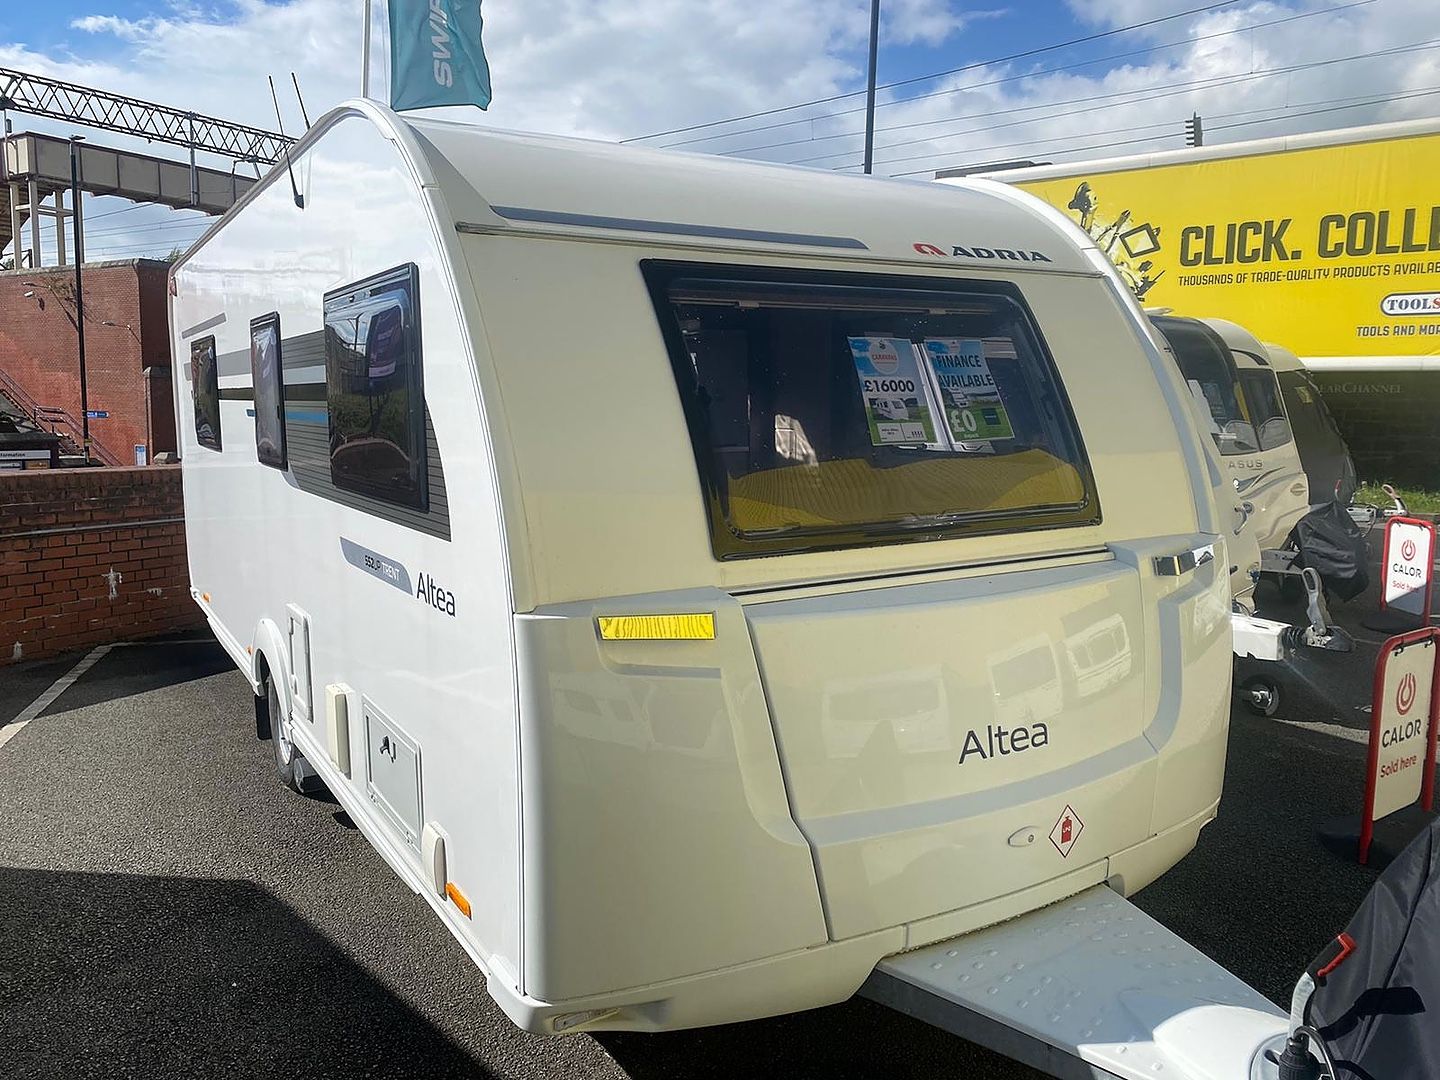 AdriaAlteaTouring Caravan for sale